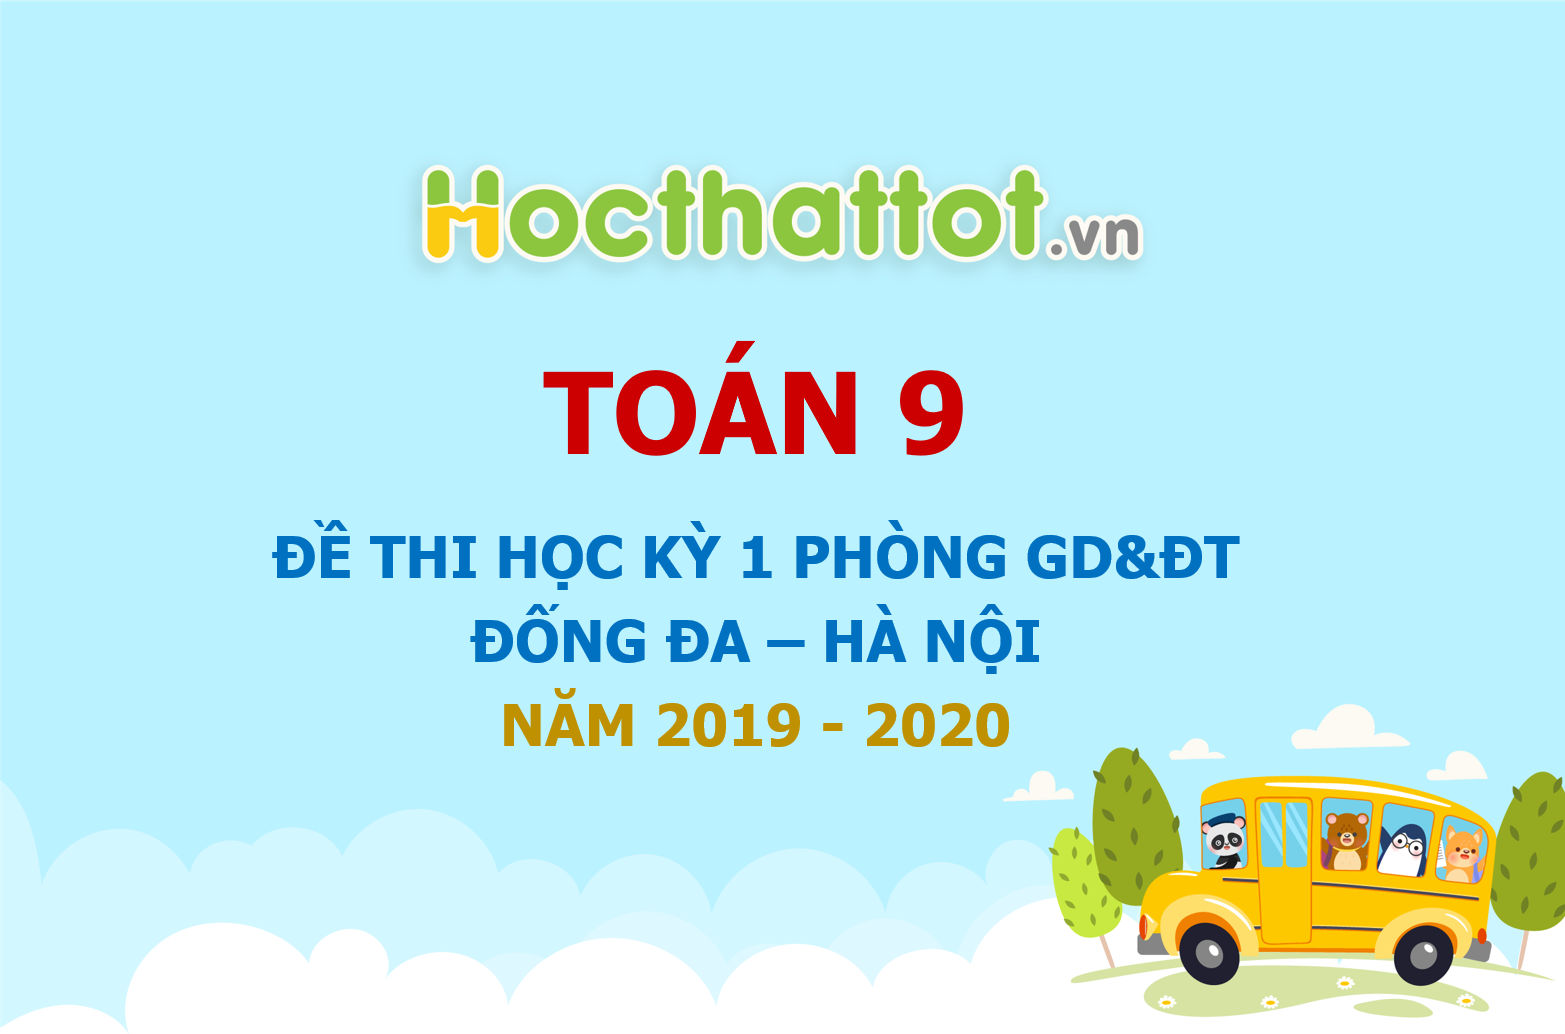 de-thi-hoc-ky-1-toan-9-nam-2019-2020-phong-gddt-dong-da-ha-noi